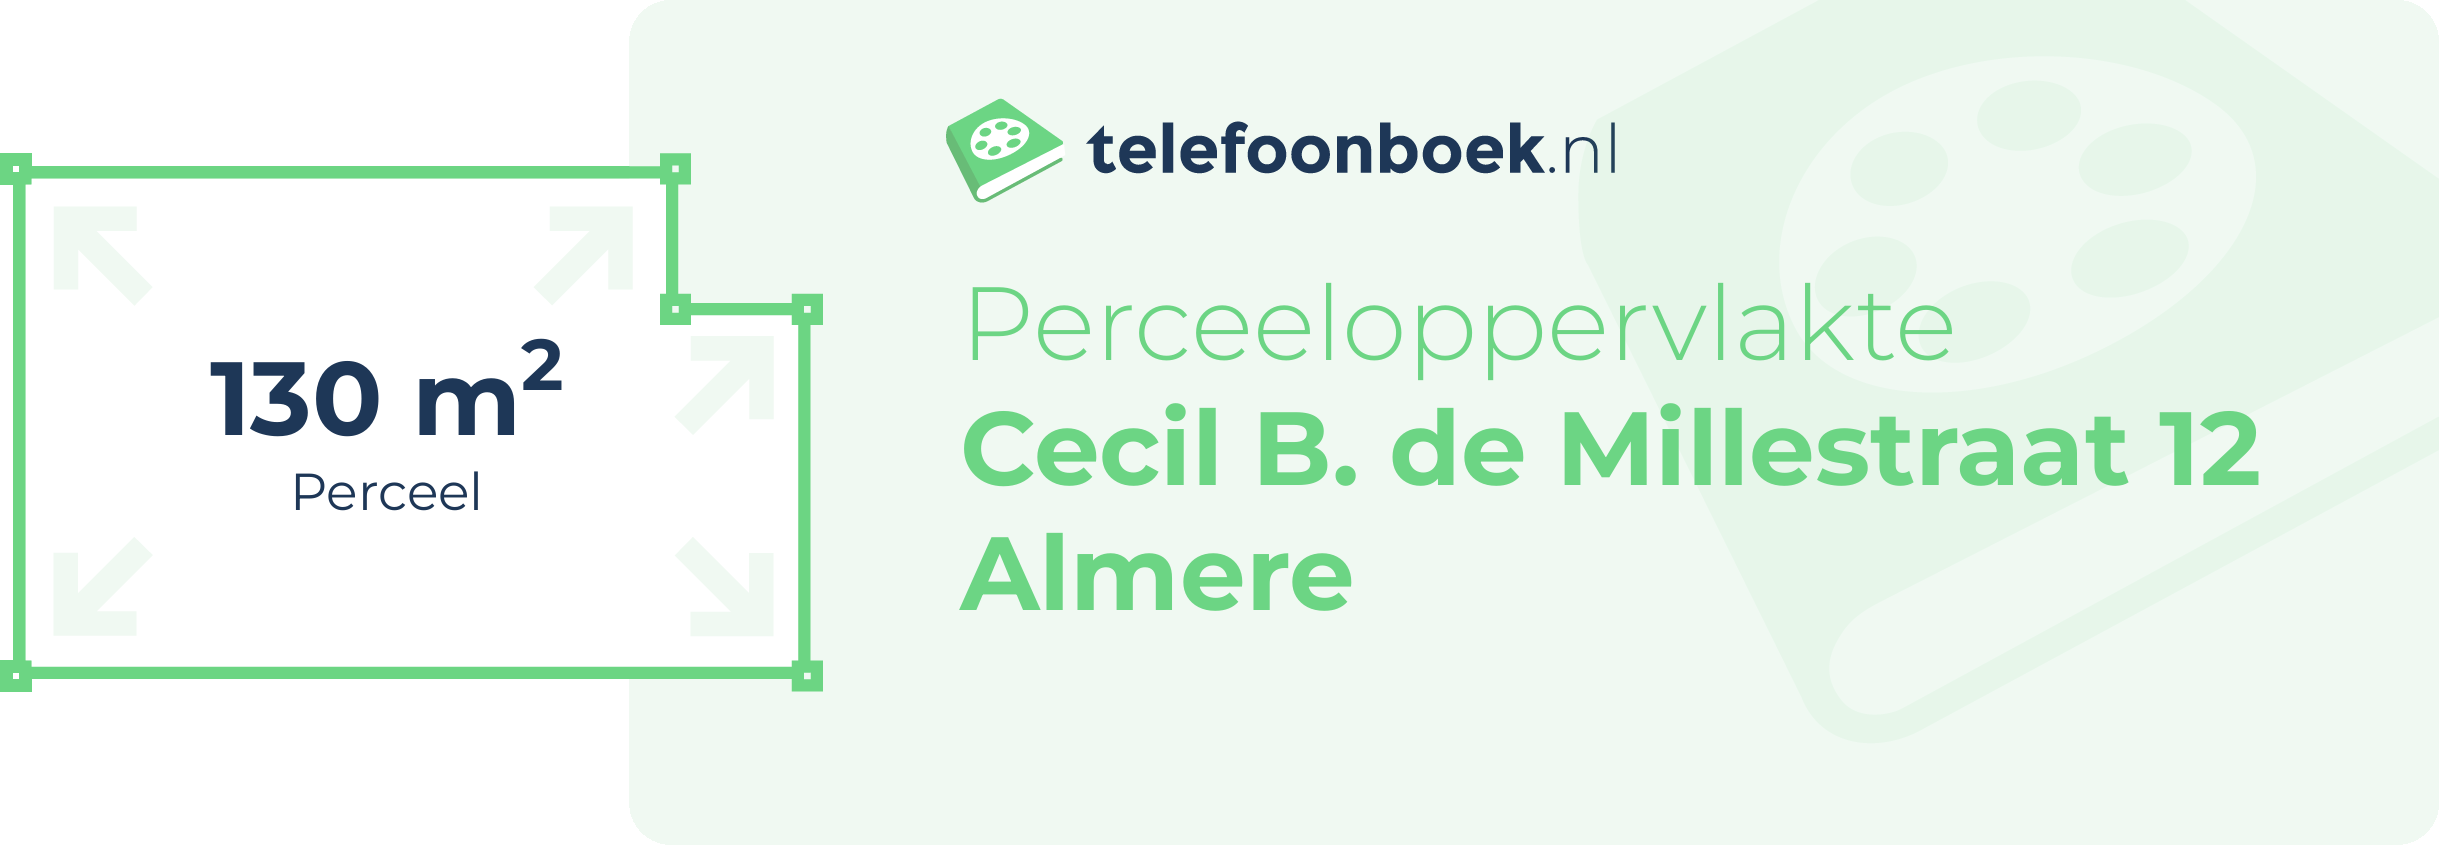 Perceeloppervlakte Cecil B. De Millestraat 12 Almere